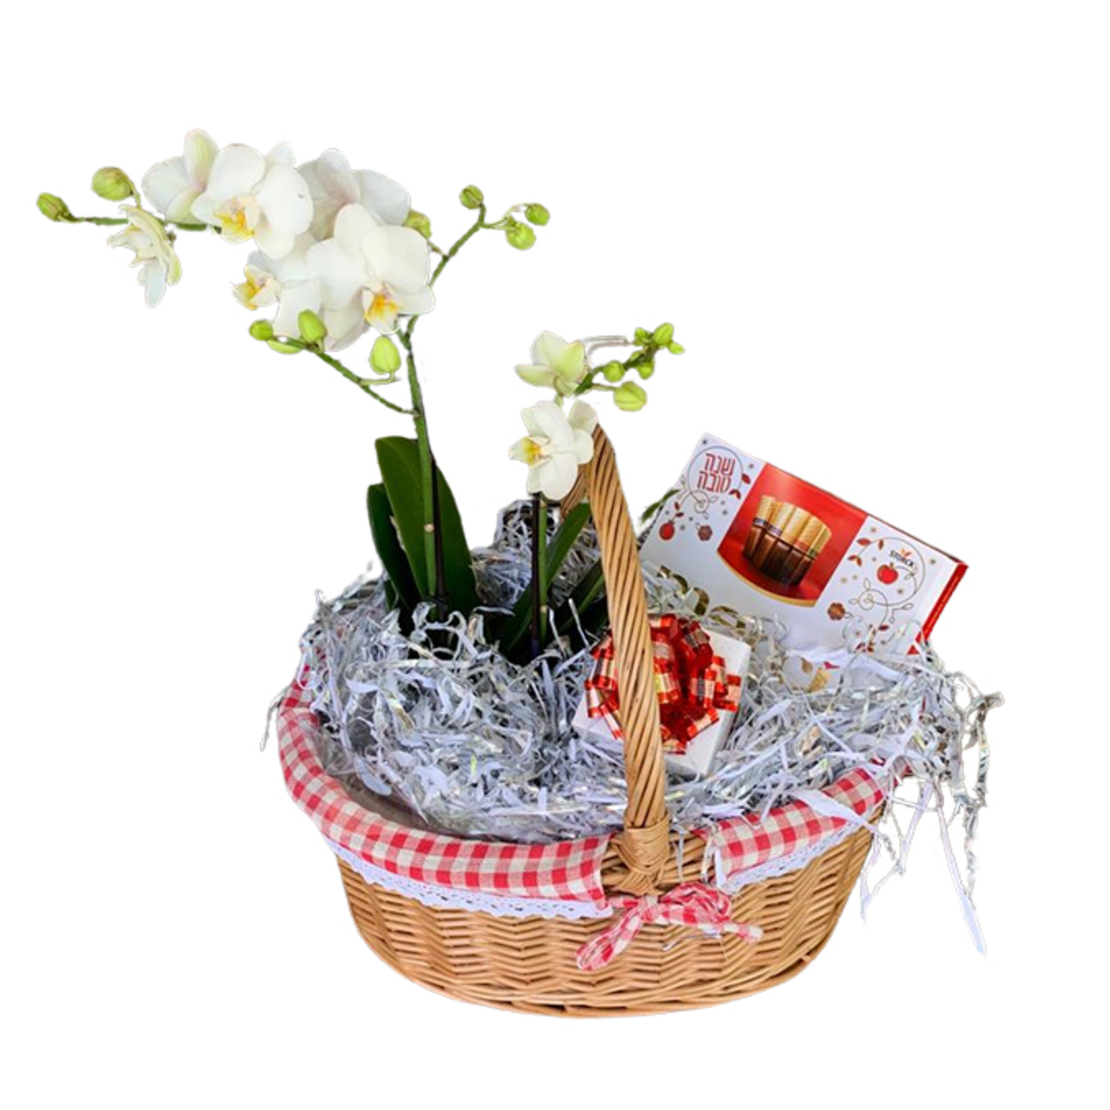 Orchid case in basket